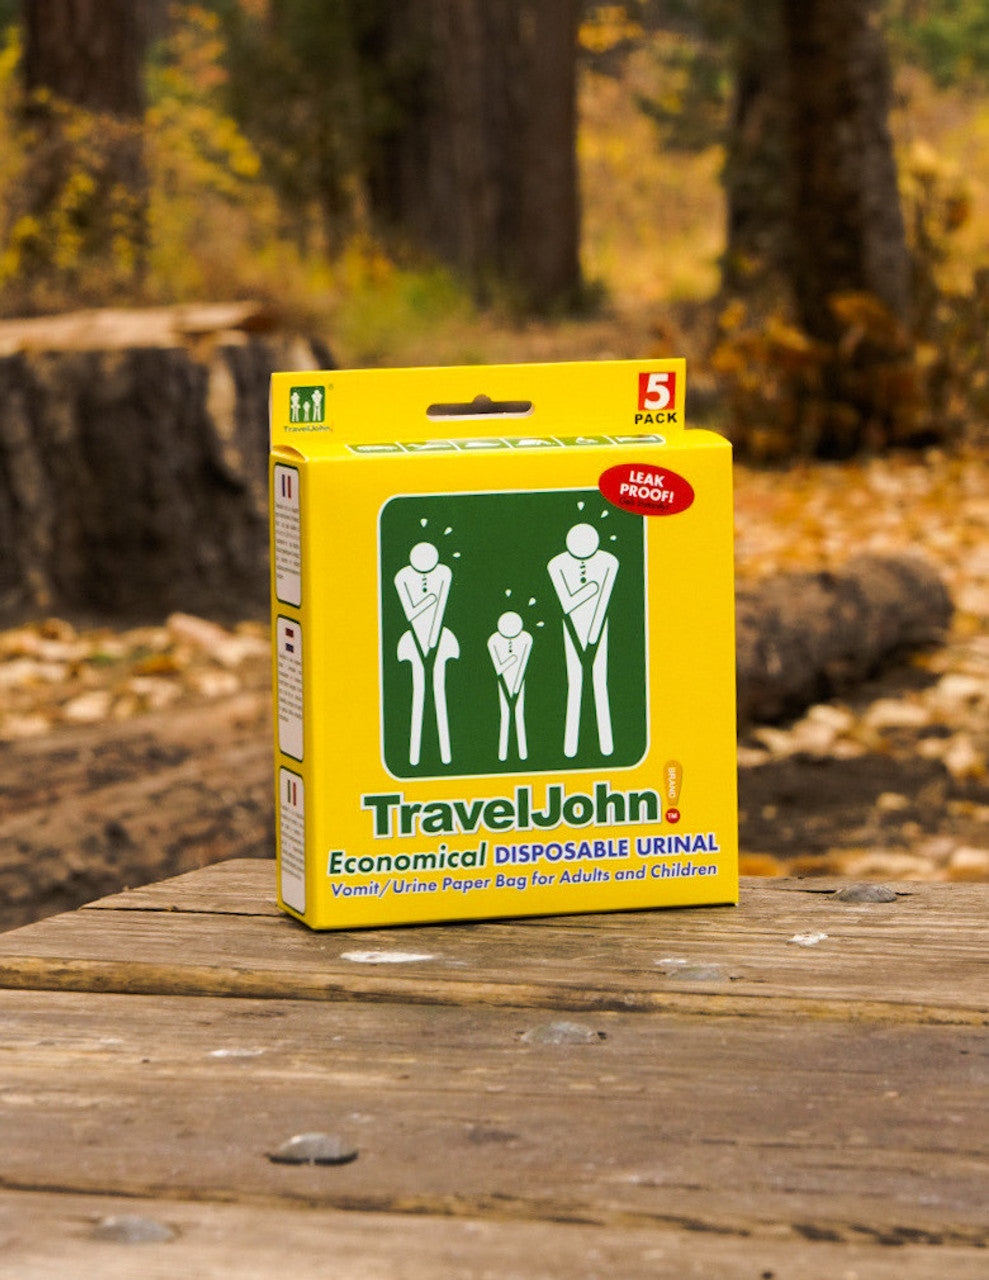 TravelJohn Disposable Vomit/Urine Bag